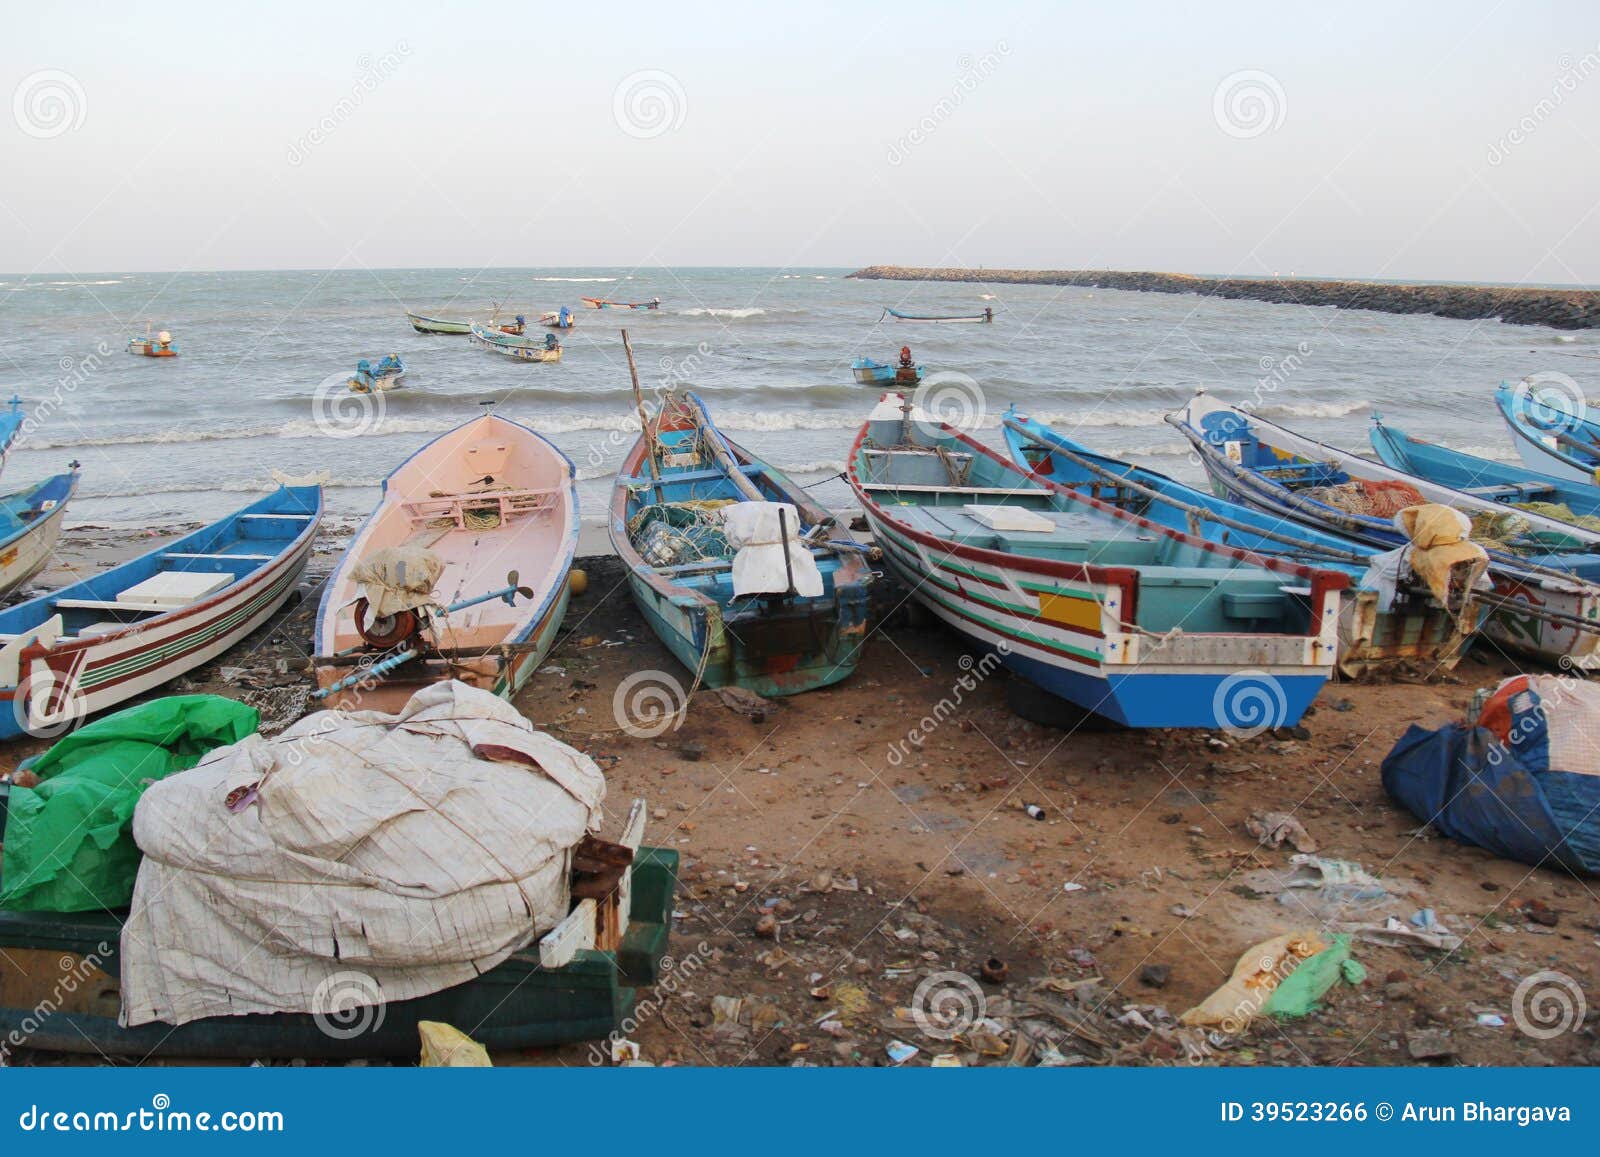 https://thumbs.dreamstime.com/z/kanyakumari-fishing-boats-coast-tamilnadu-india-small-motor-39523266.jpg